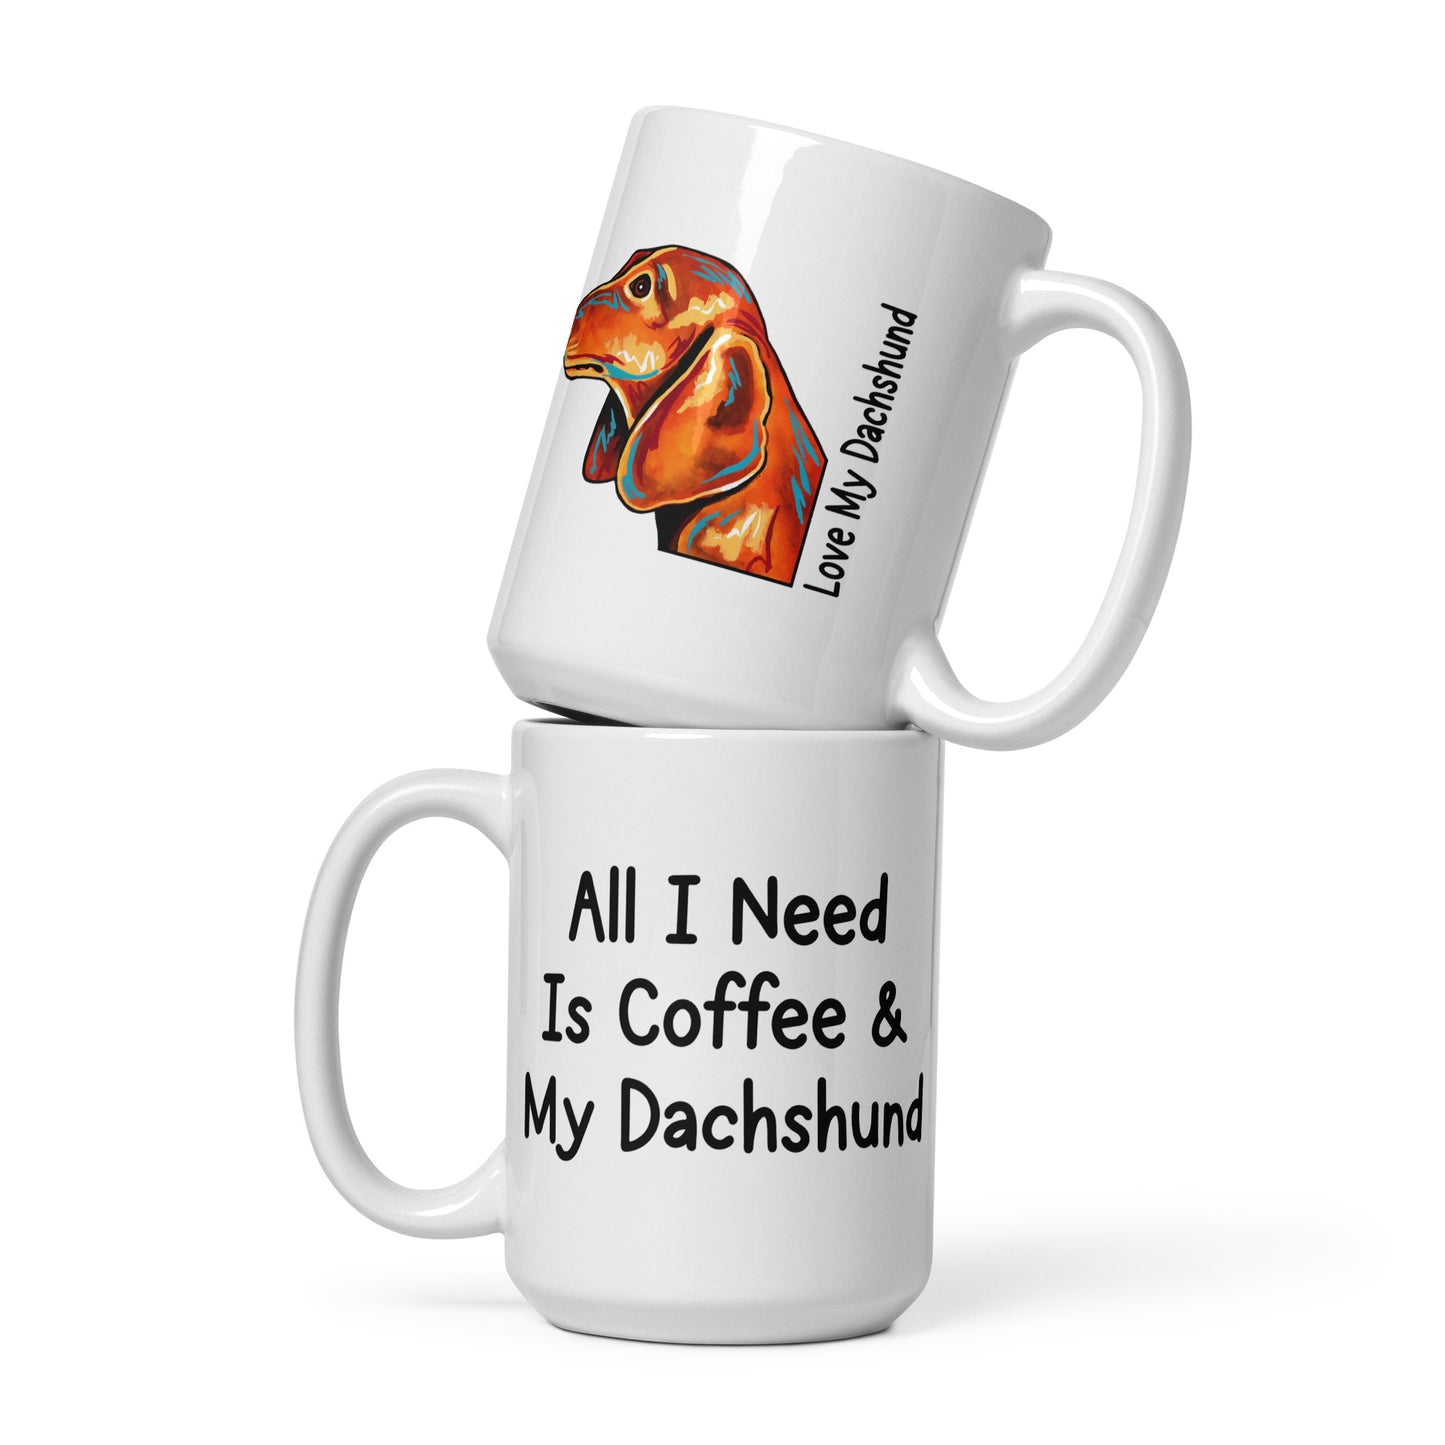 All I Need Is Coffee & My Dachshund - White Glossy Mug